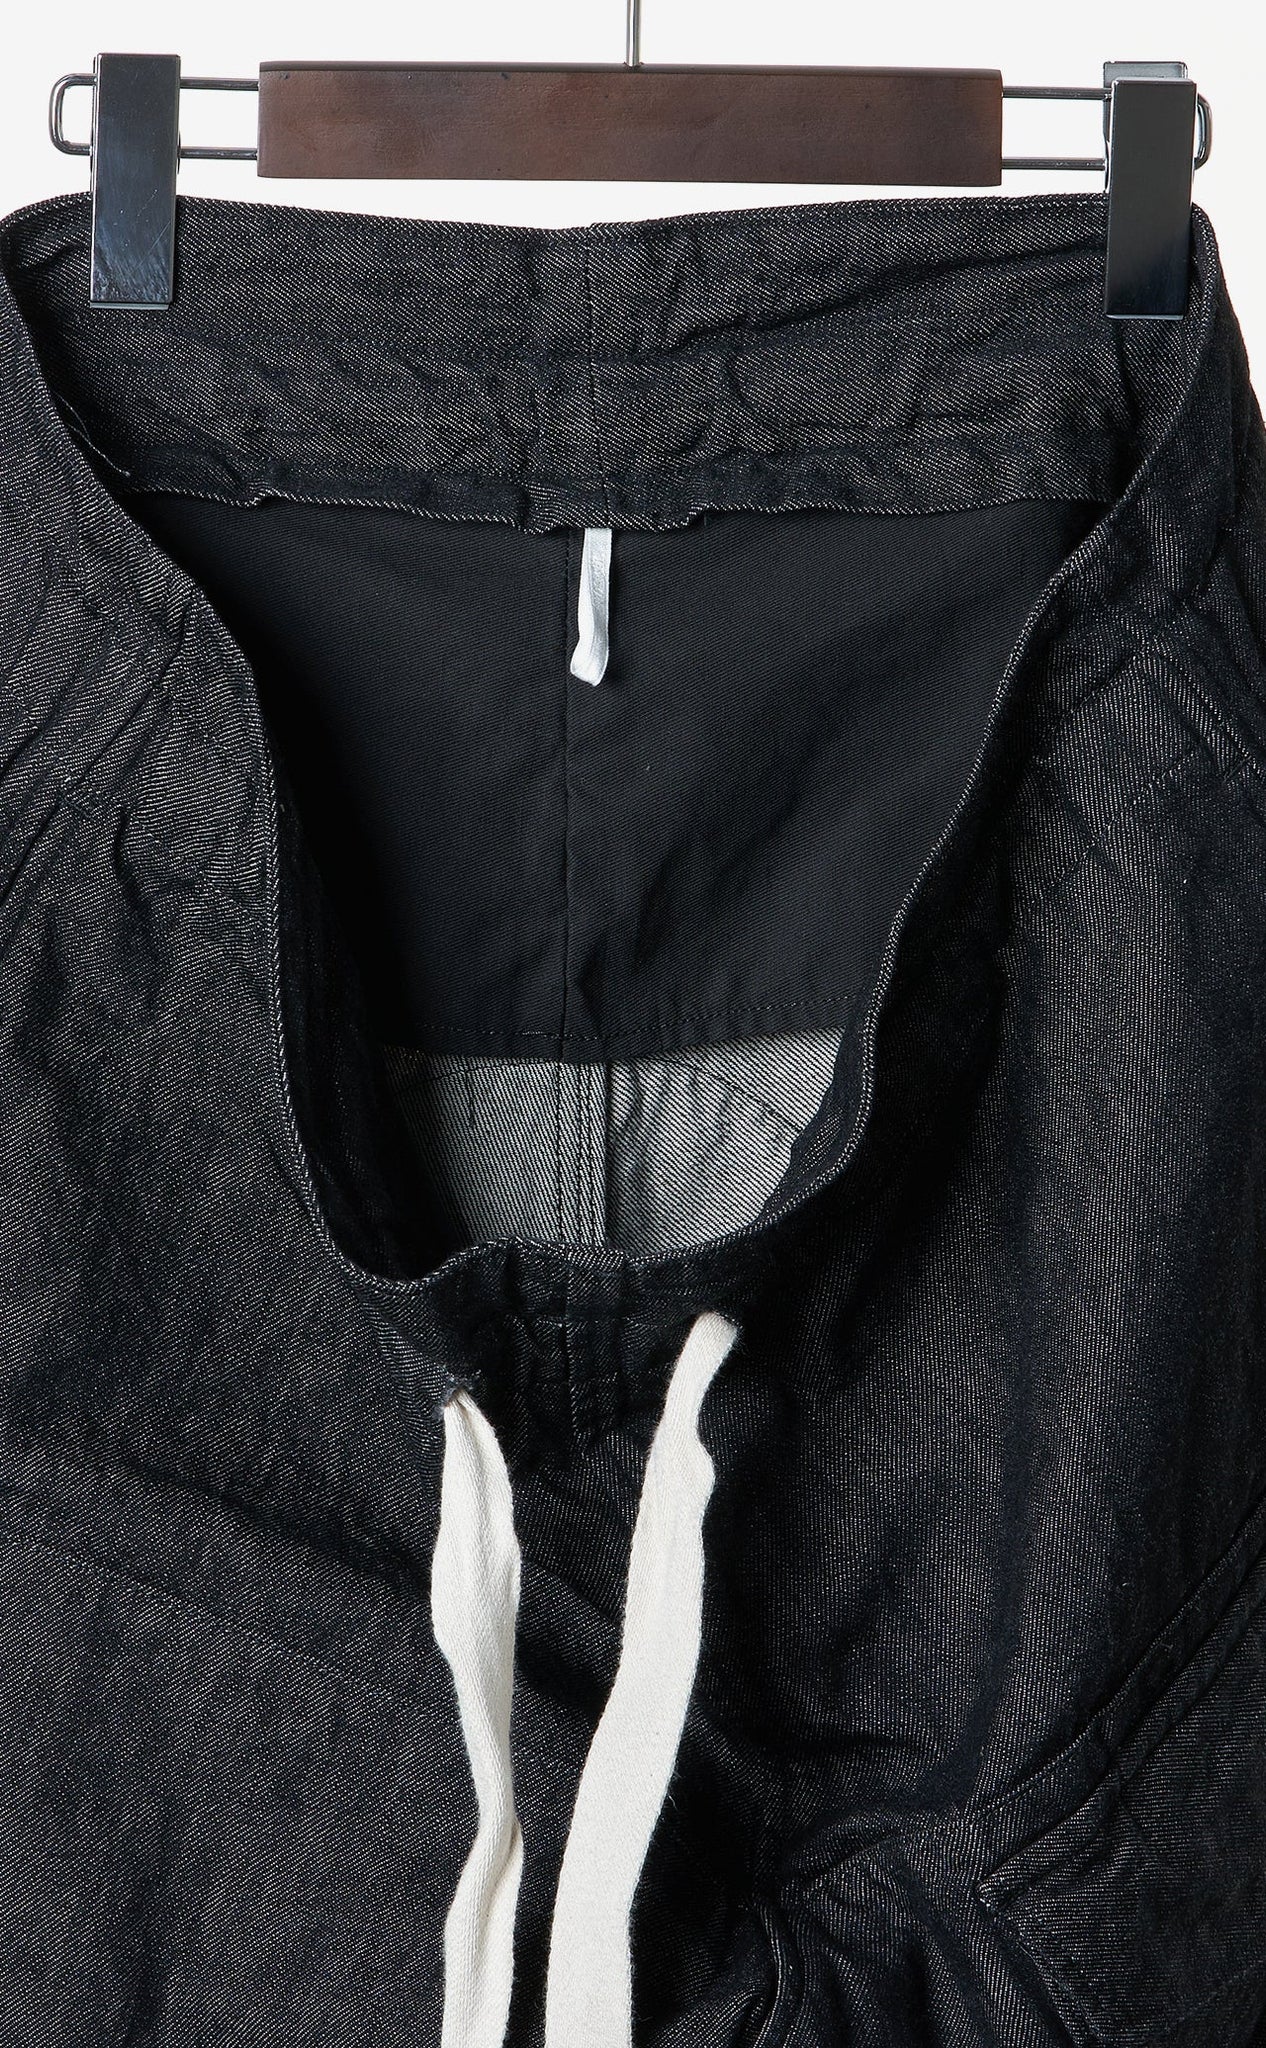 sus-sous trousers MK-1 / 11.5oz supima silket denim (BLACK)